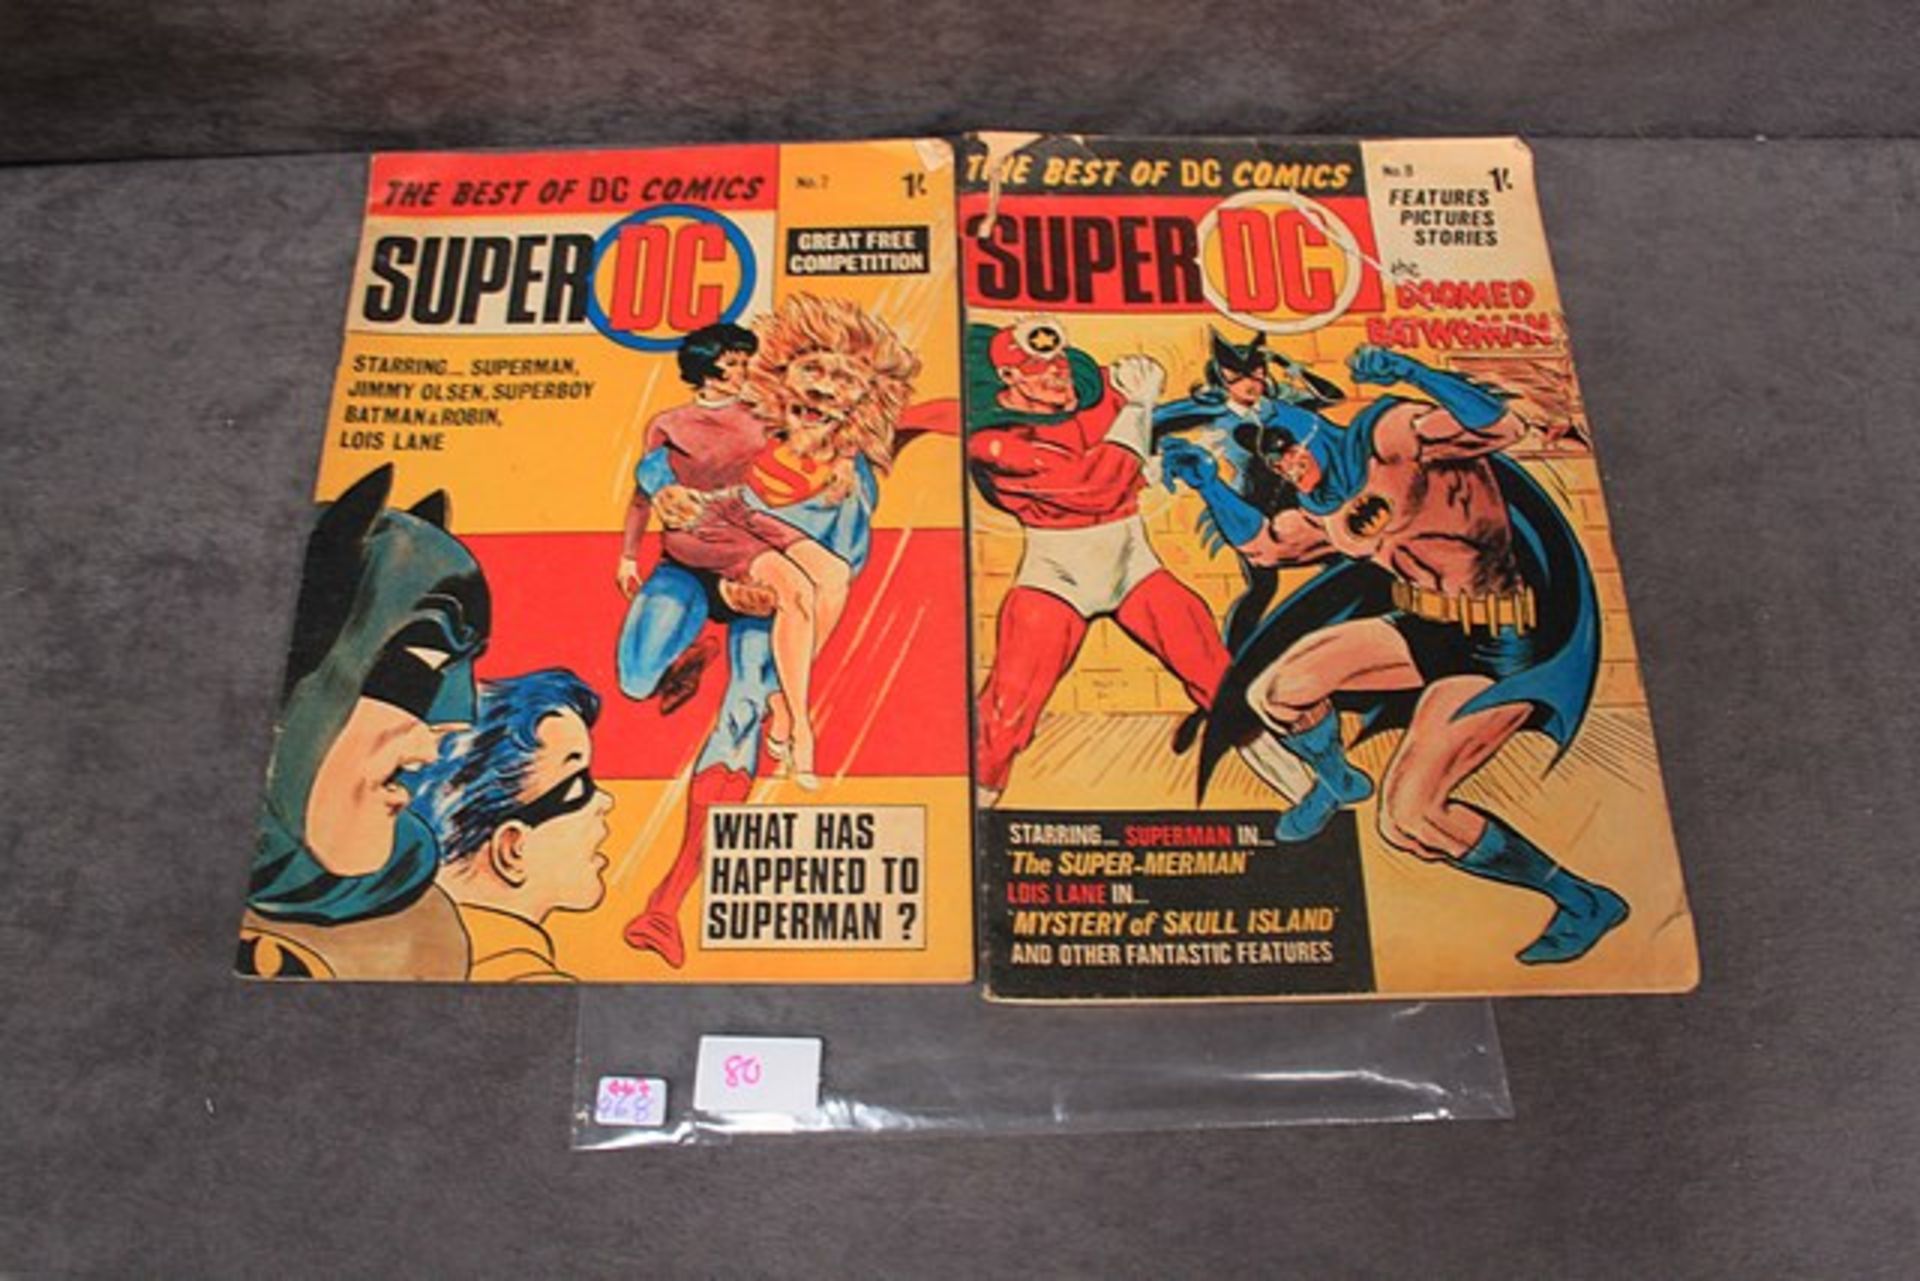 2 x Super DC Thorpe & Porter, 1969 Series Vintage Comics Comprising Of Super DC #7 And Super DC #8